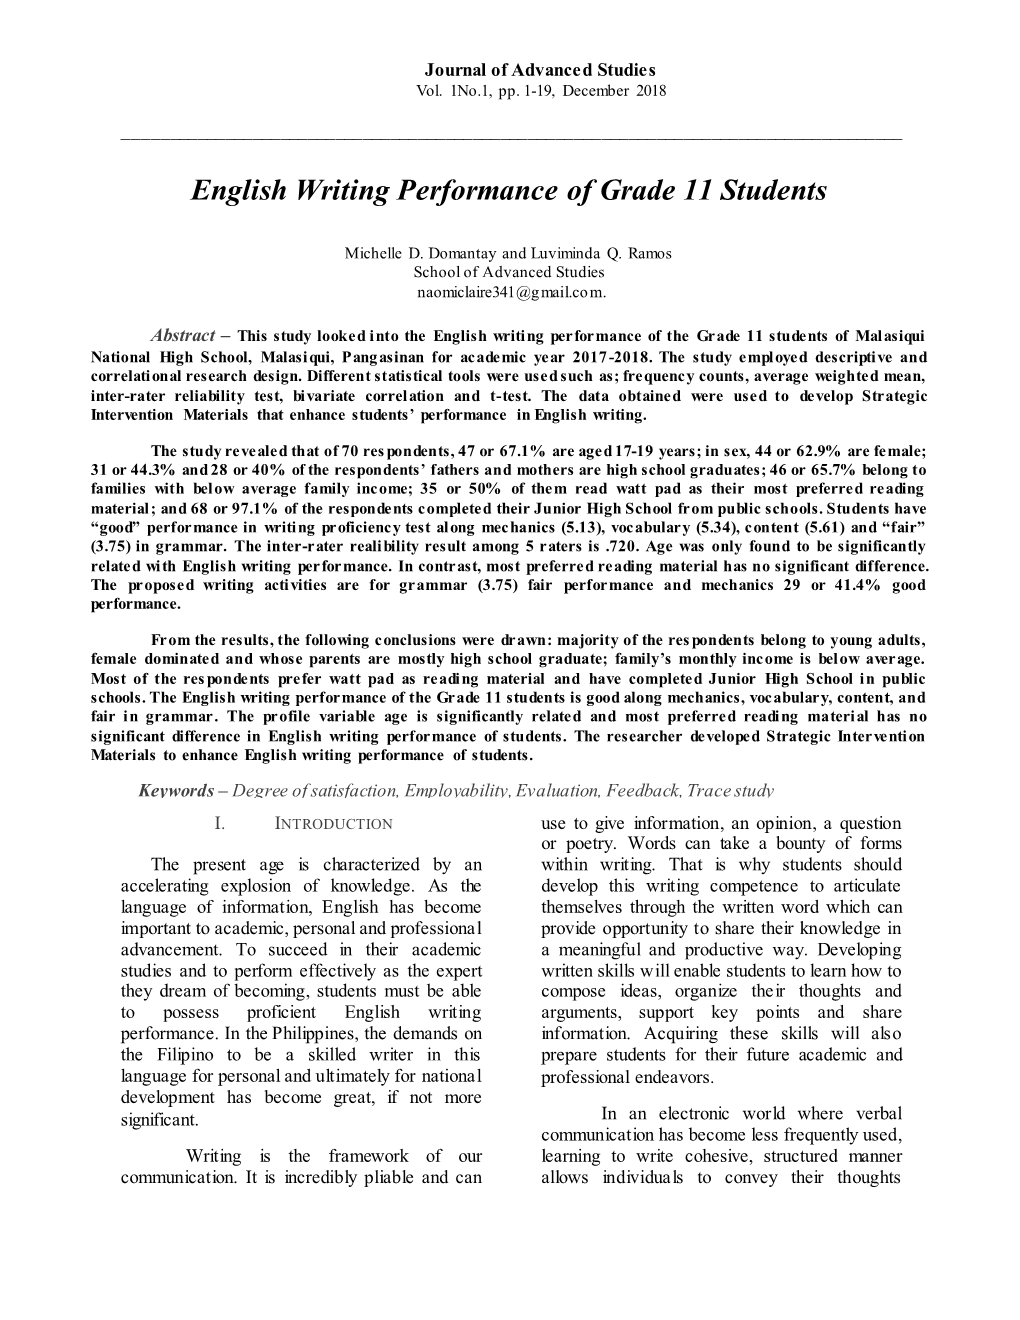 English Writing Performance of Grade 11 Students